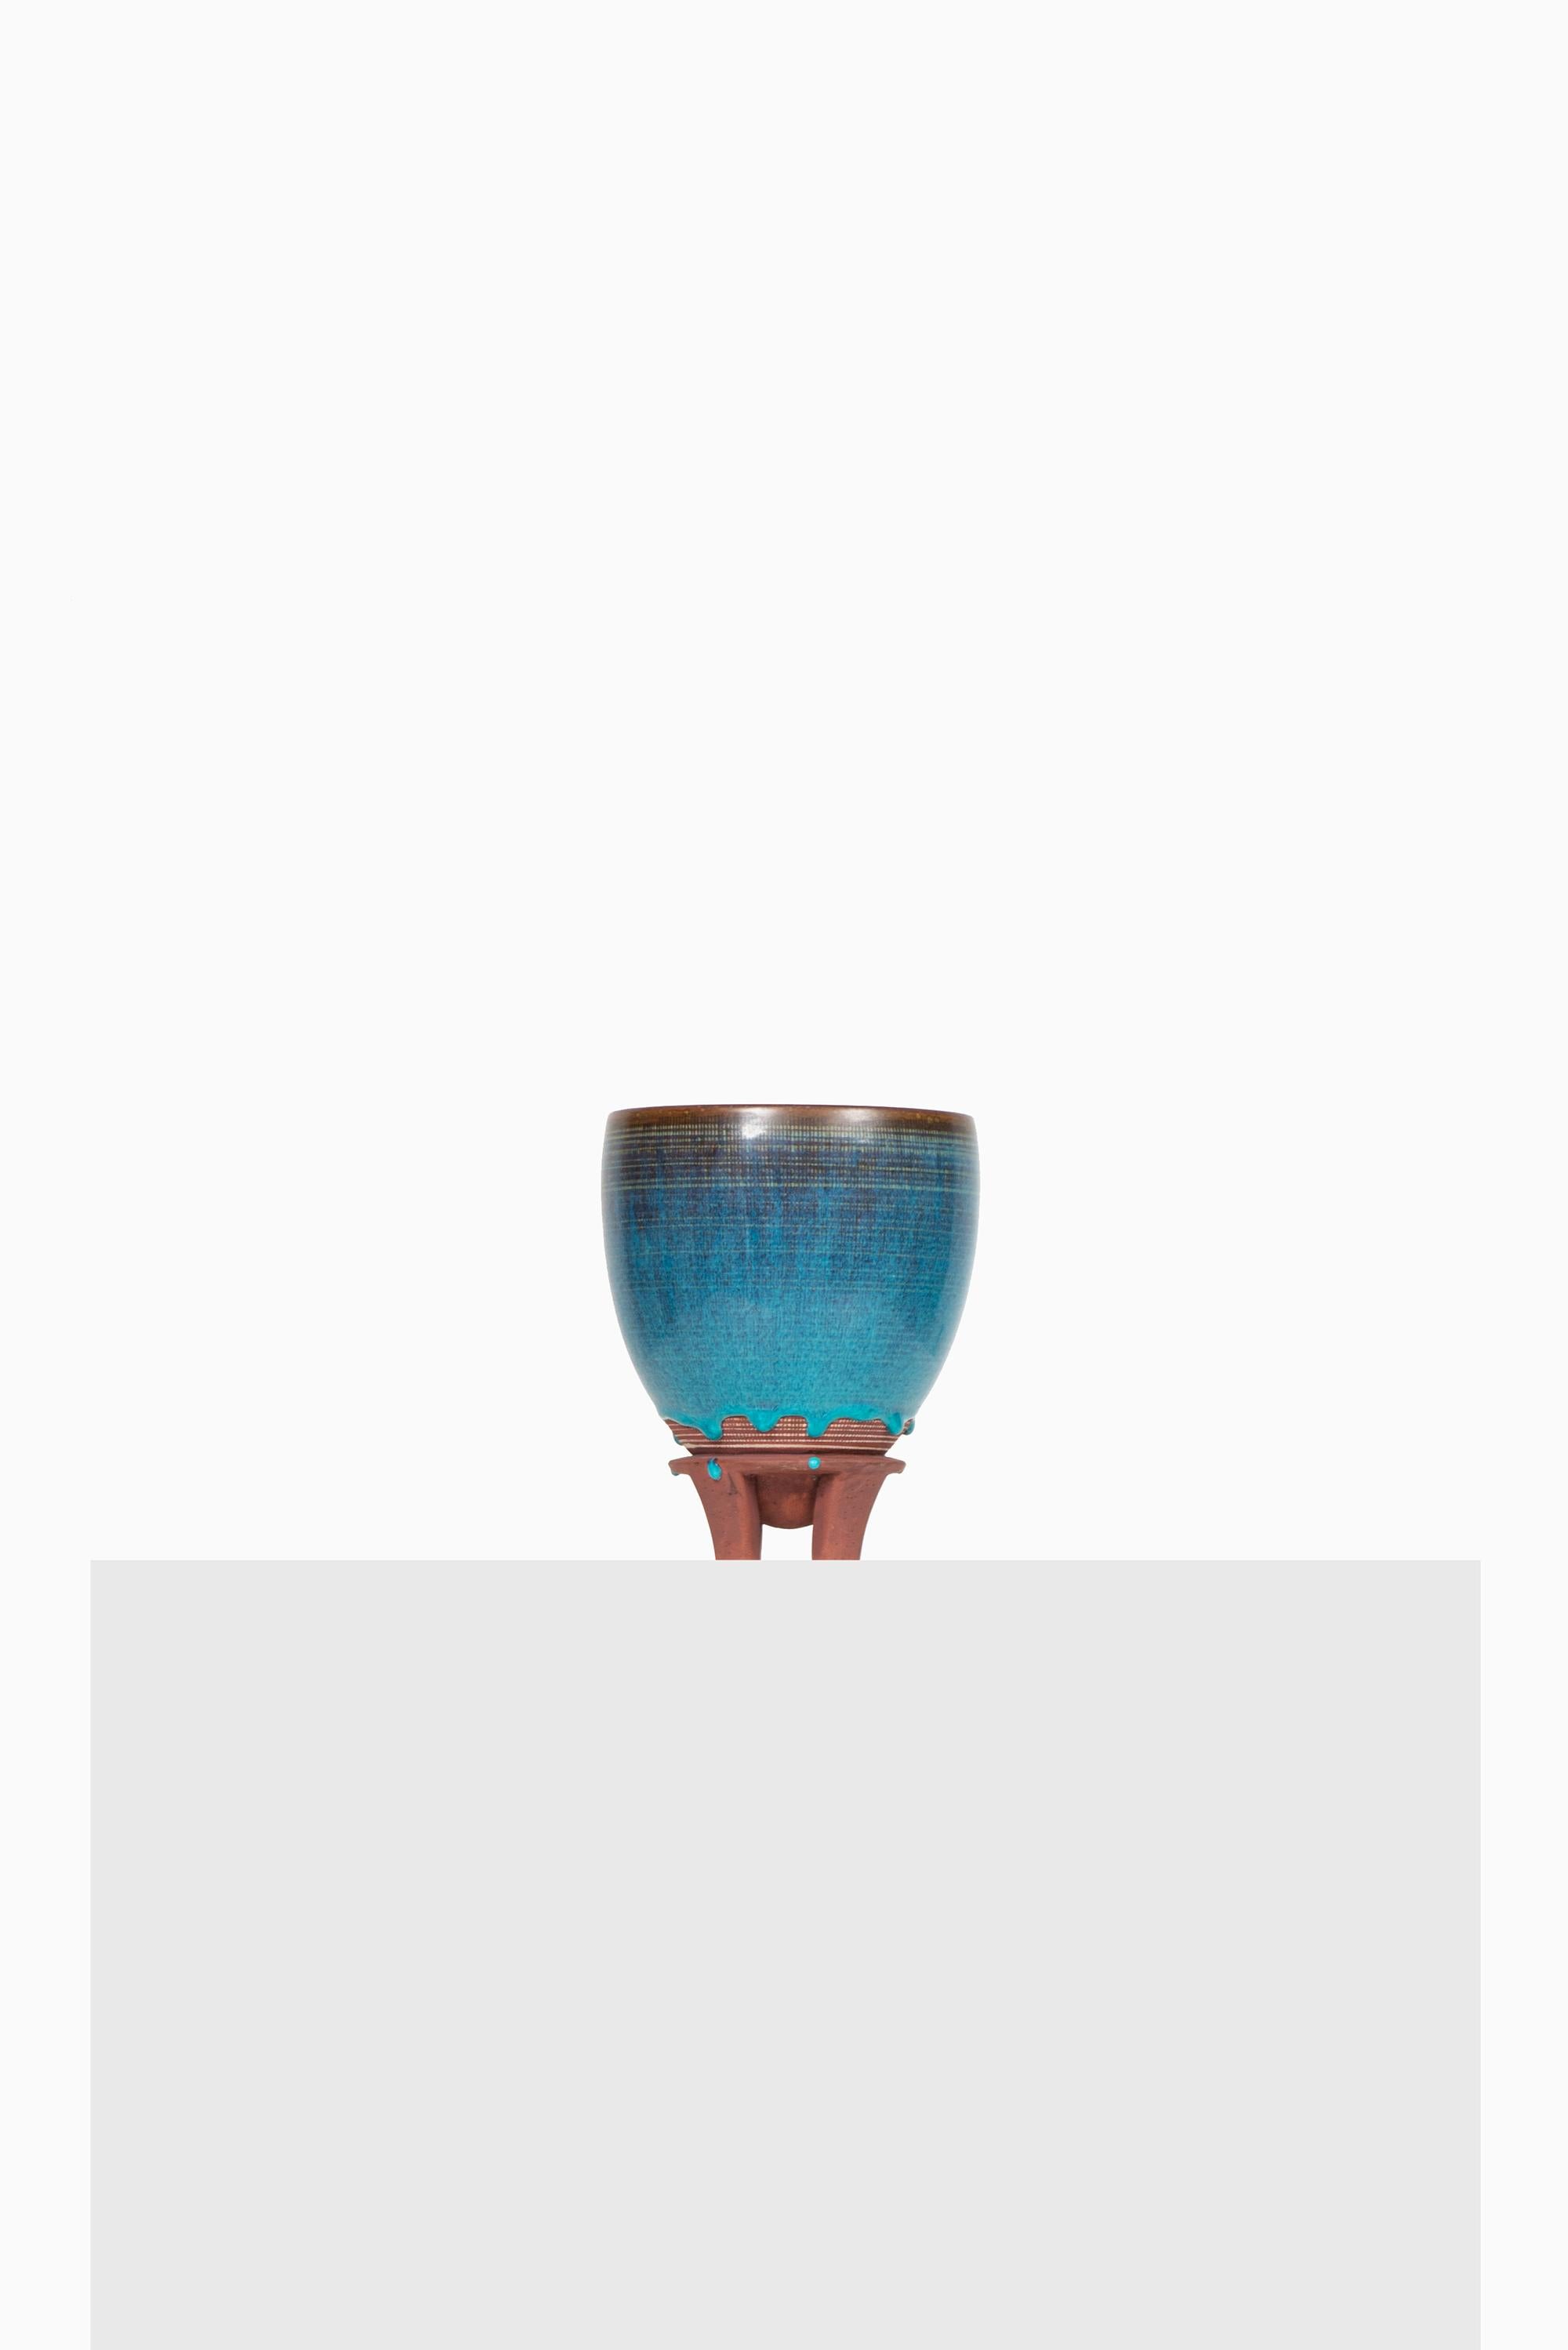 Scandinavian Modern Wilhelm Kåge Ceramic Vase Model Farsta by Gustavsberg in Sweden